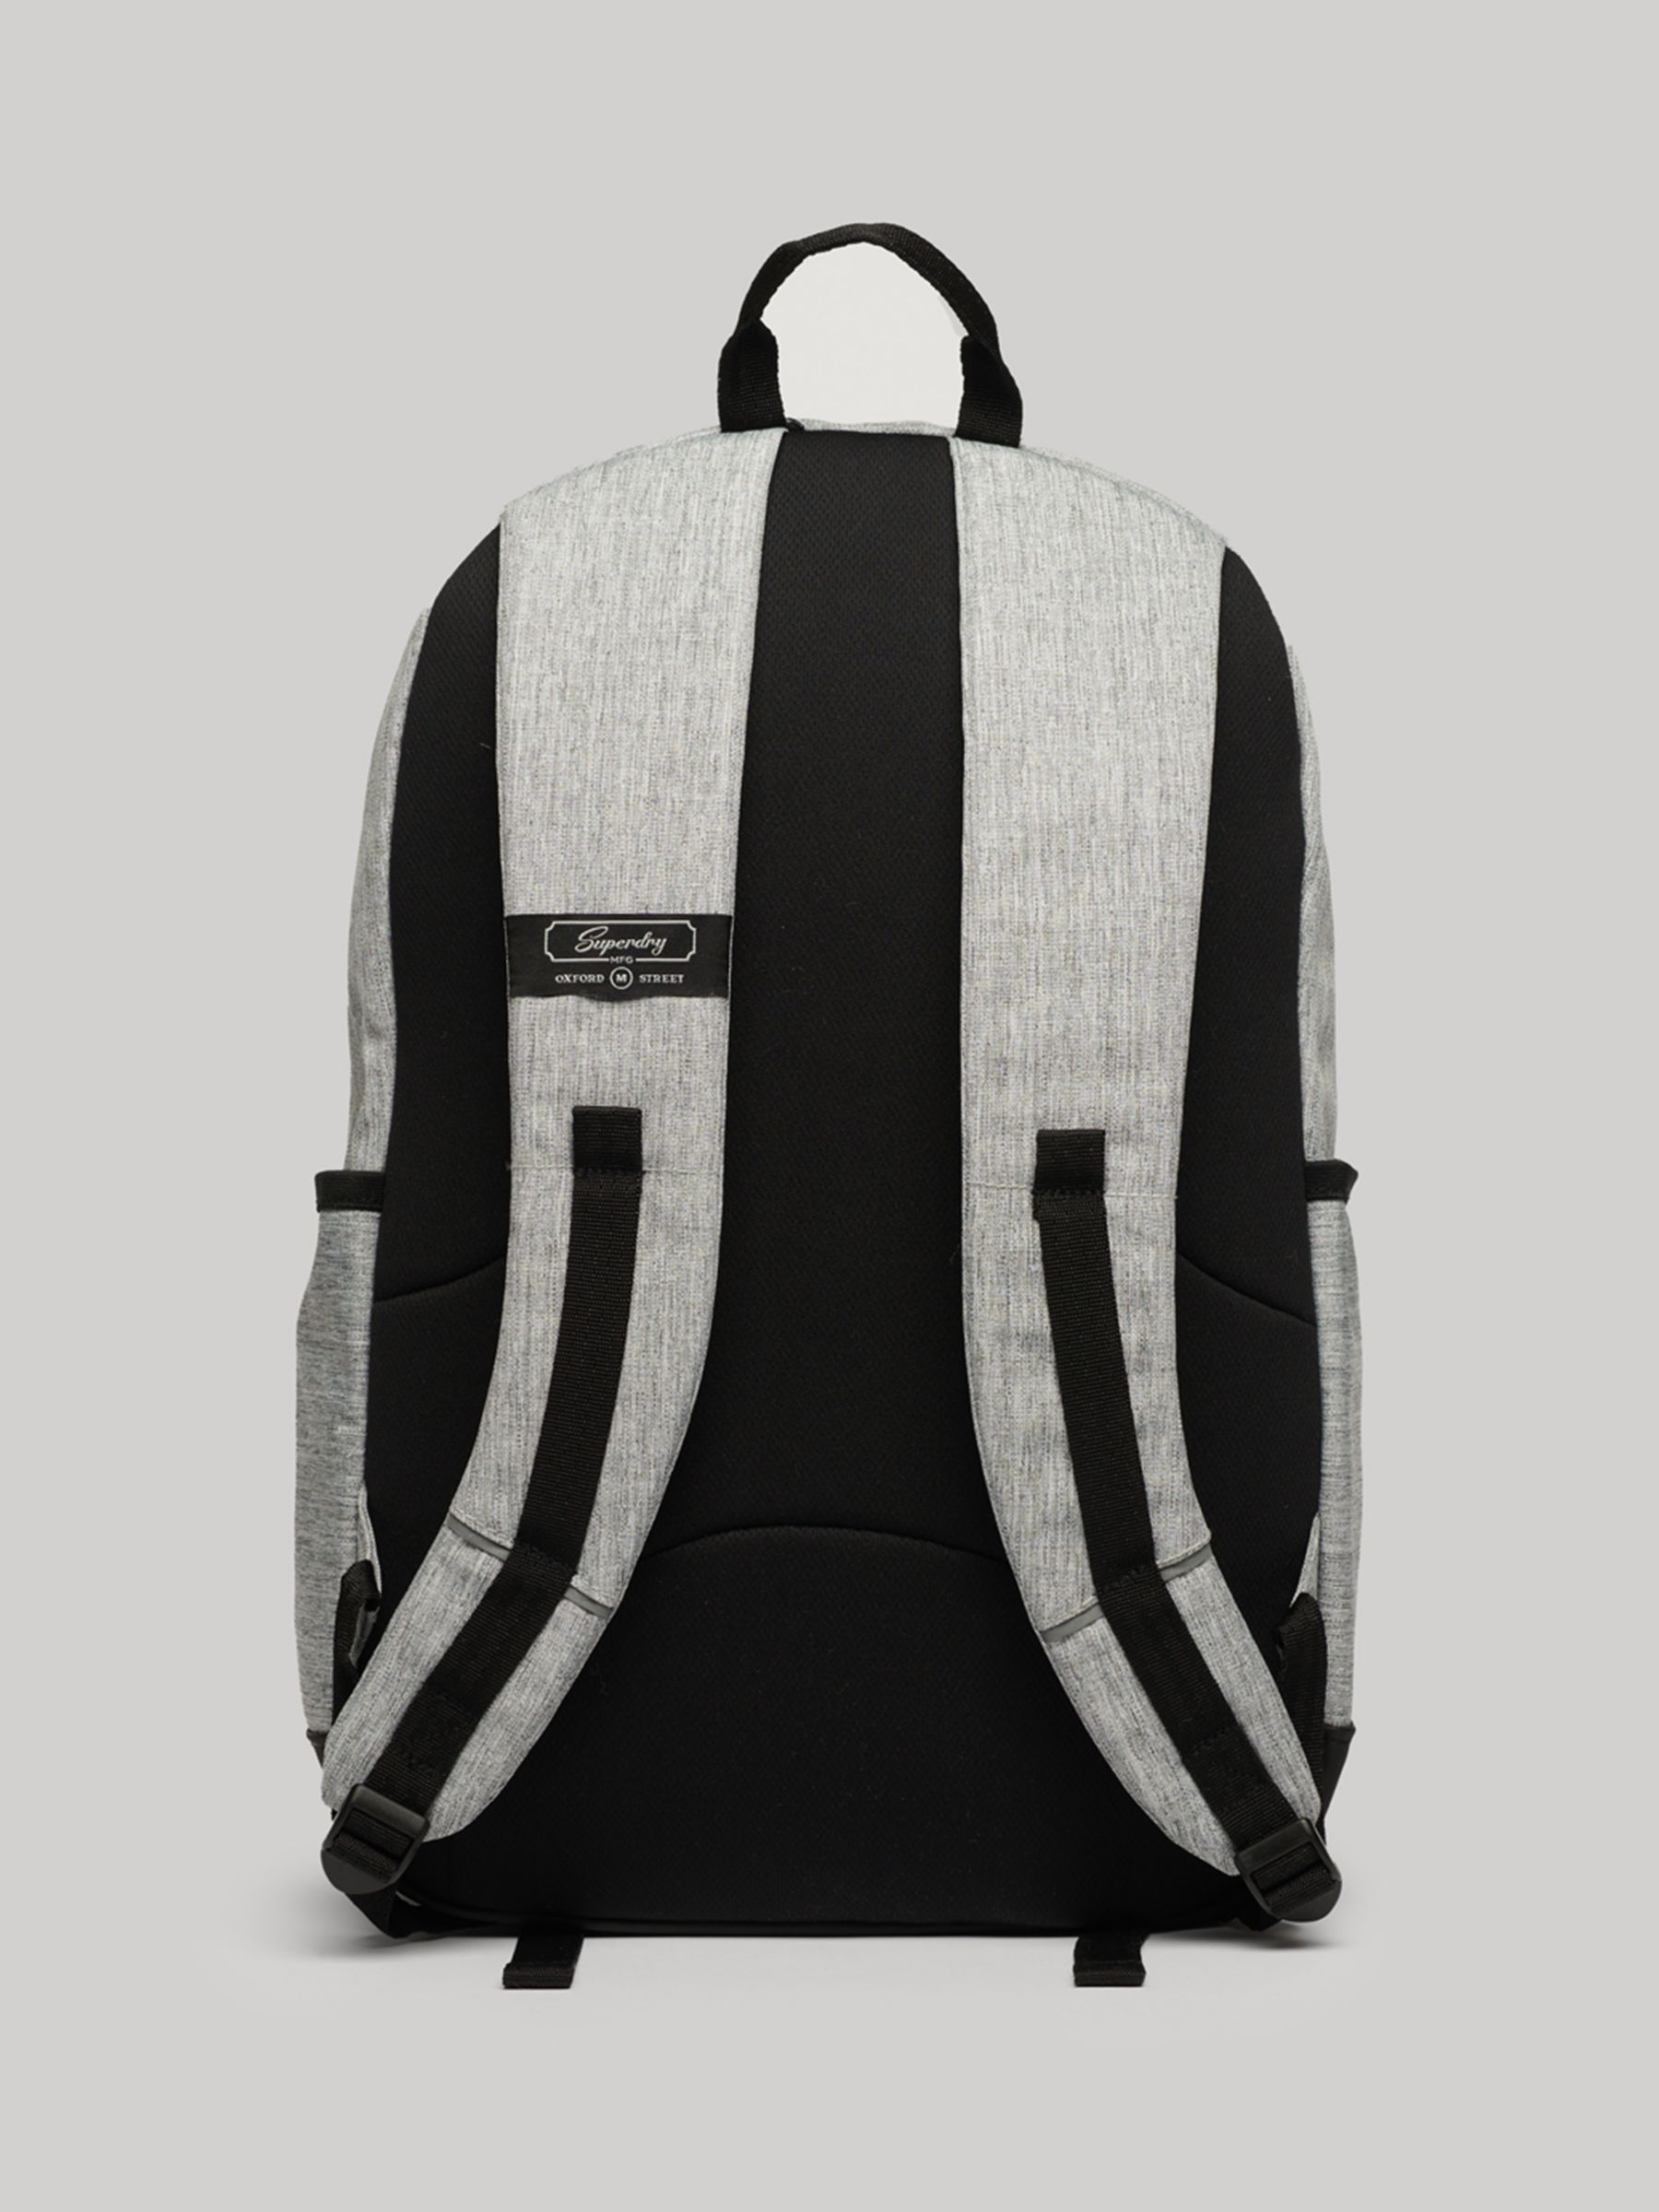 Buy Superdry Heritage Montana Backpack Online at johnlewis.com